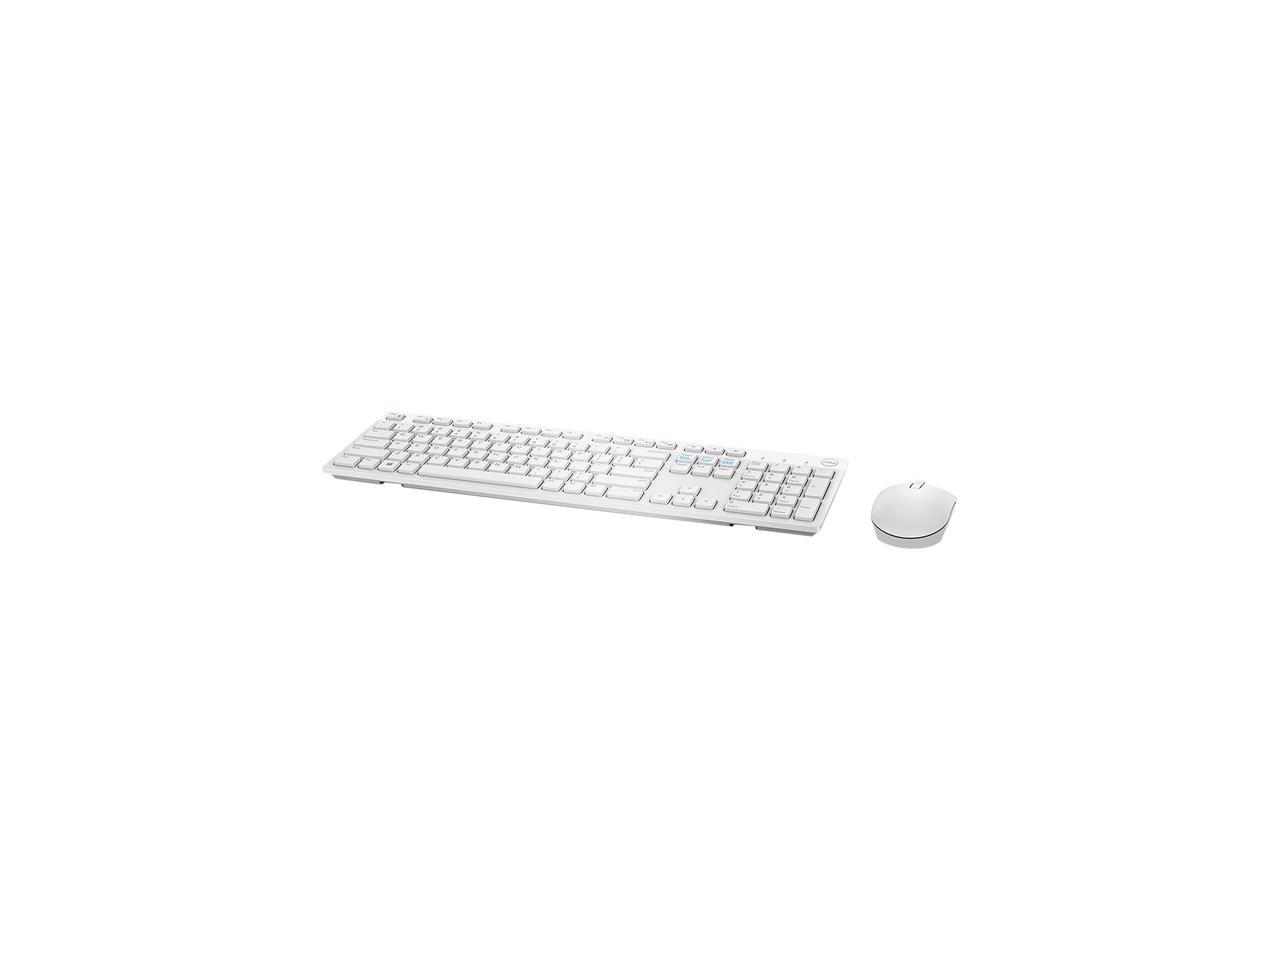 DELL KM636 580-ADVO White USB RF Wireless Standard Keyboard & Mouse